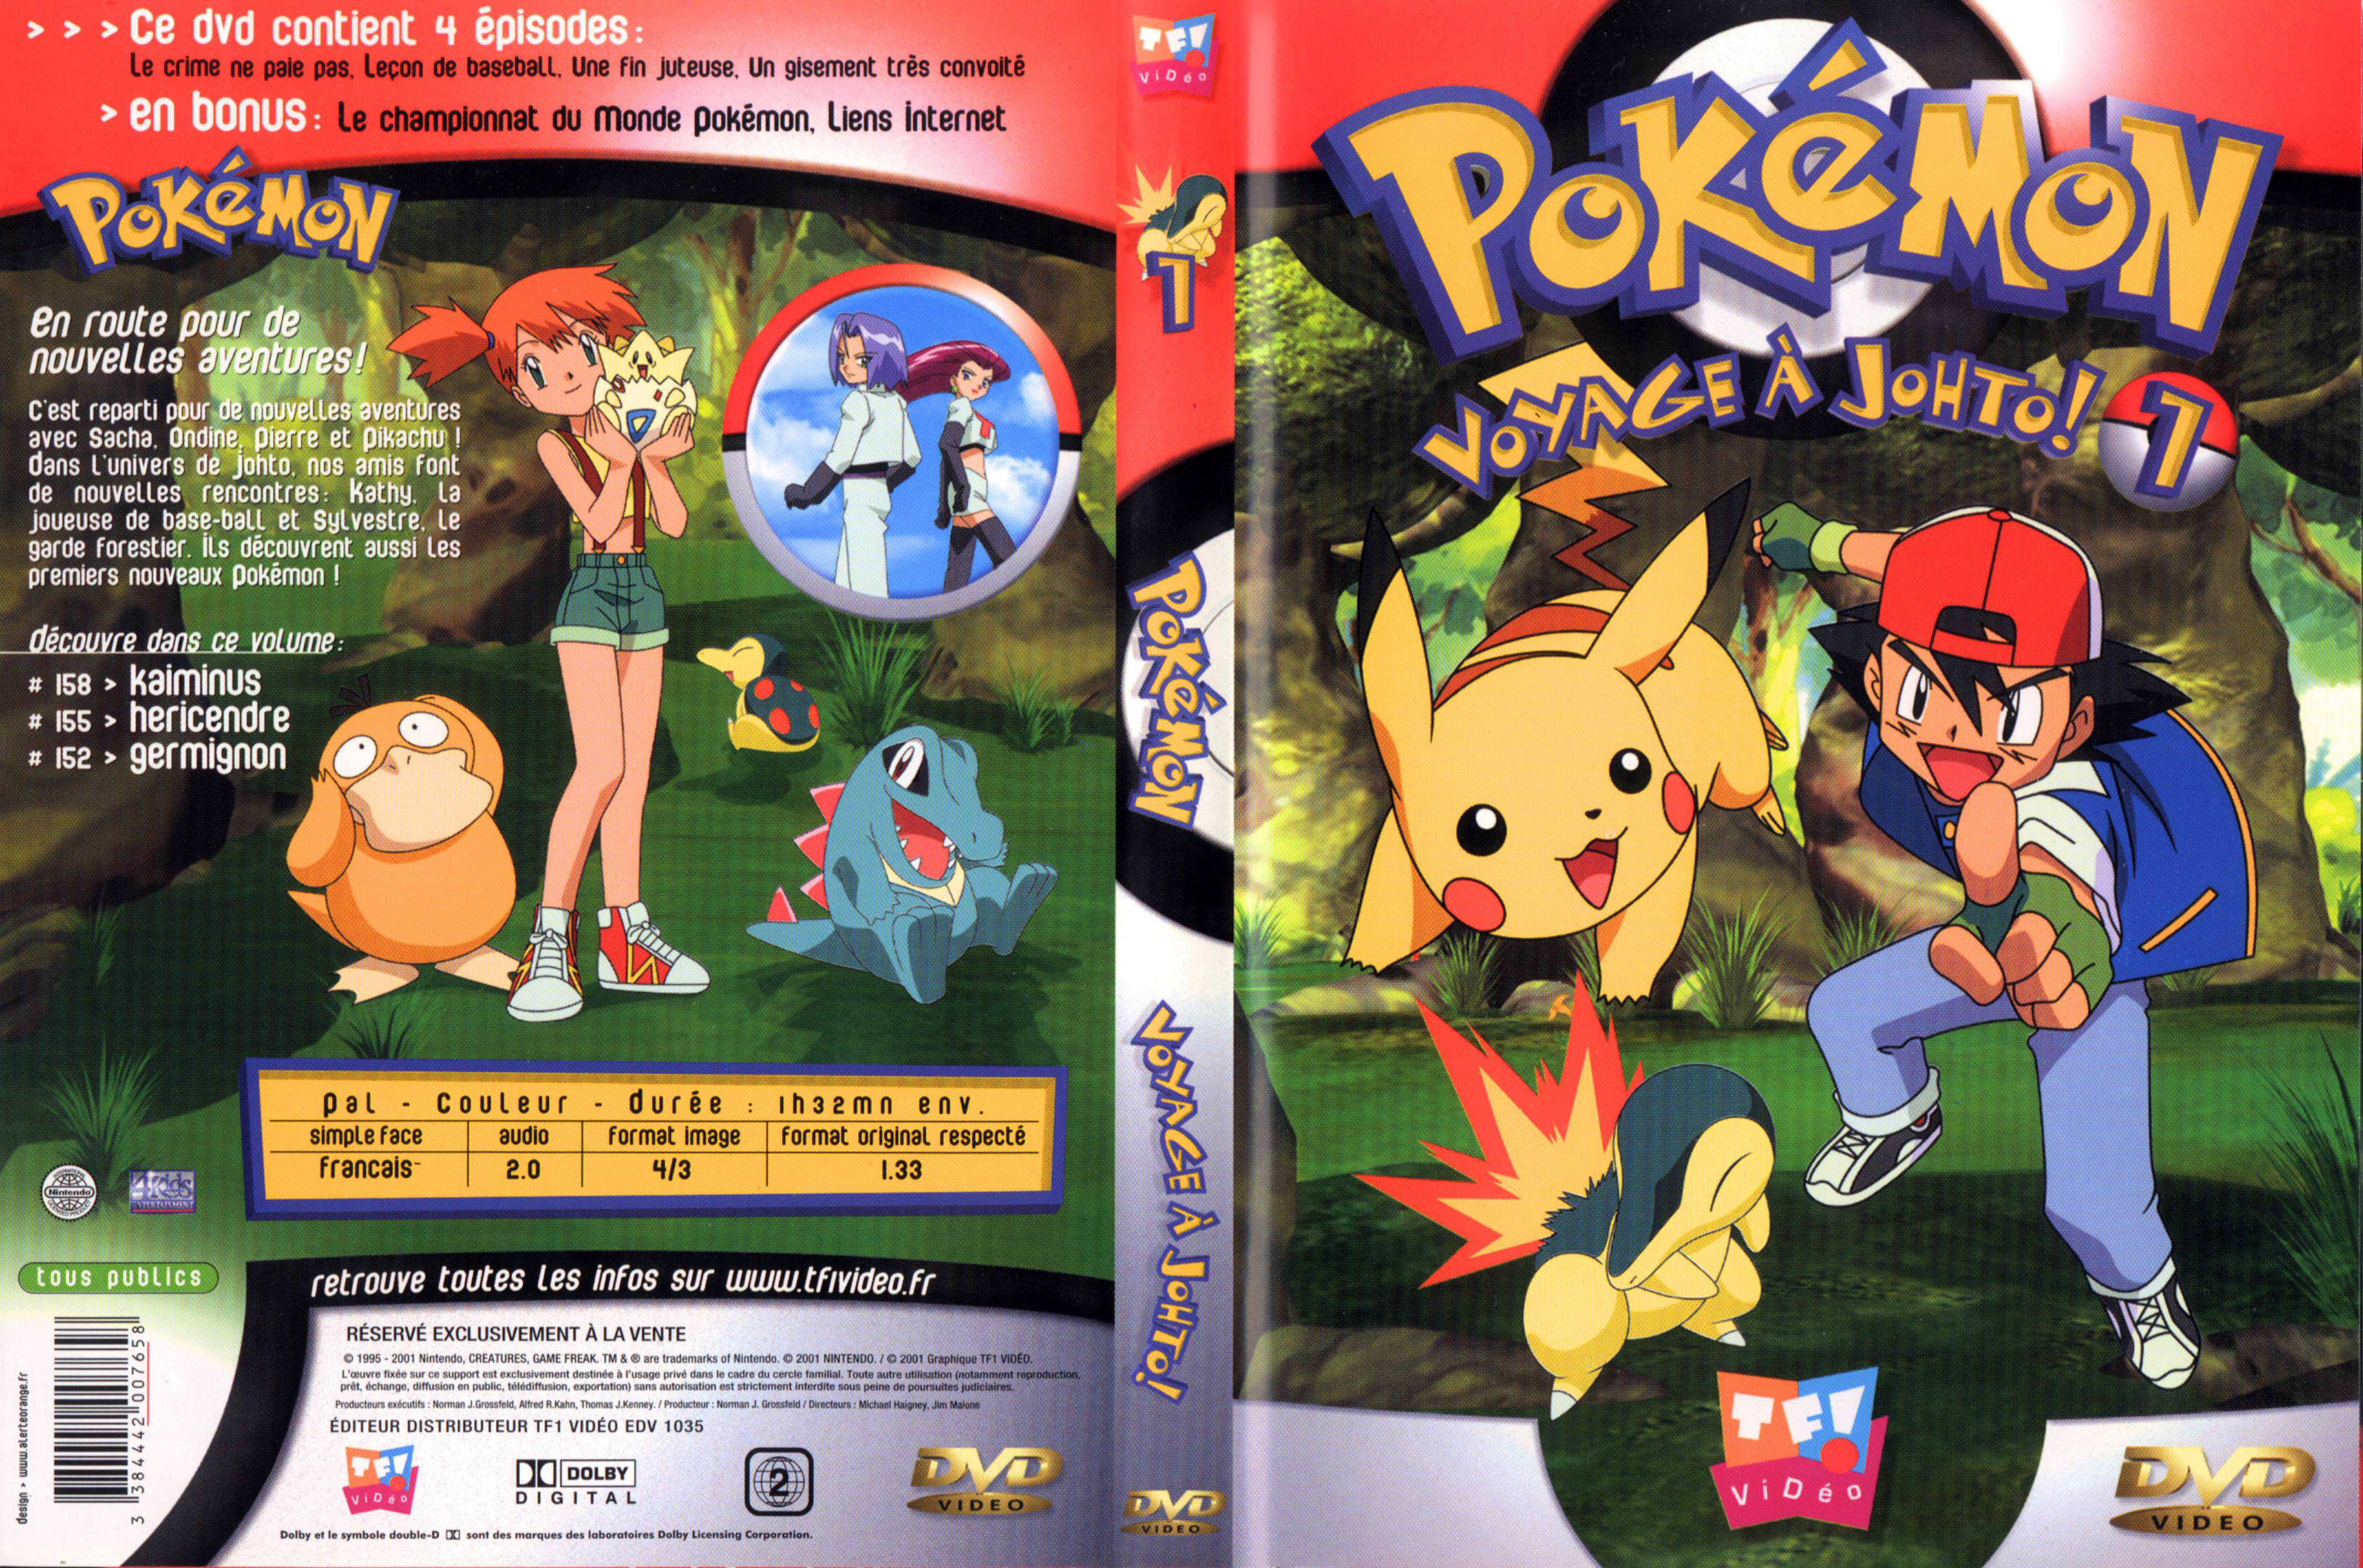 Jaquette DVD Pokemon voyage  johto vol 01